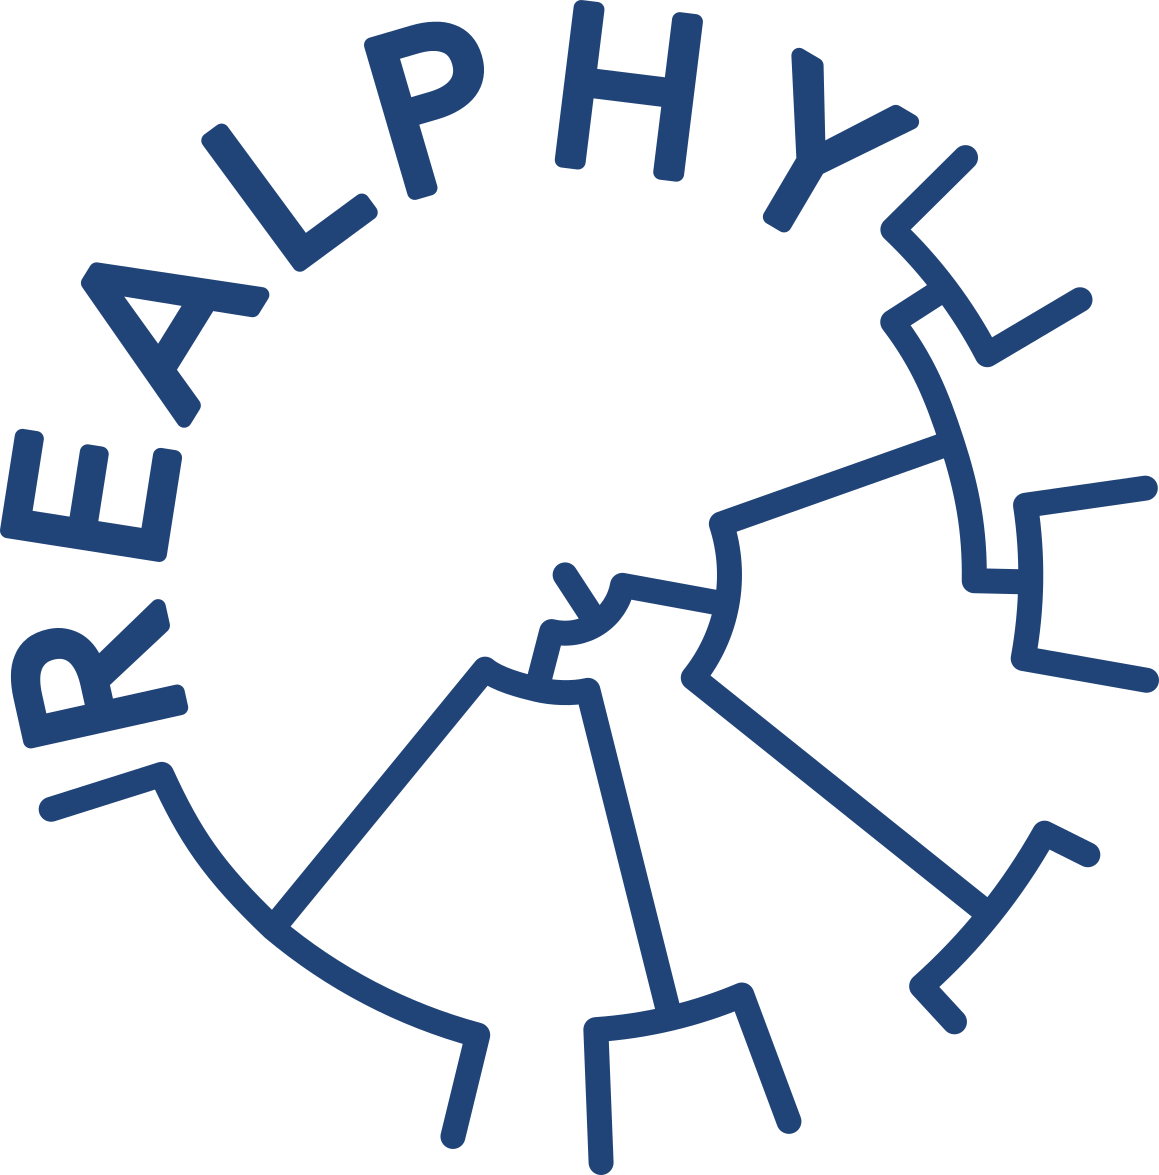 REALPHY logo